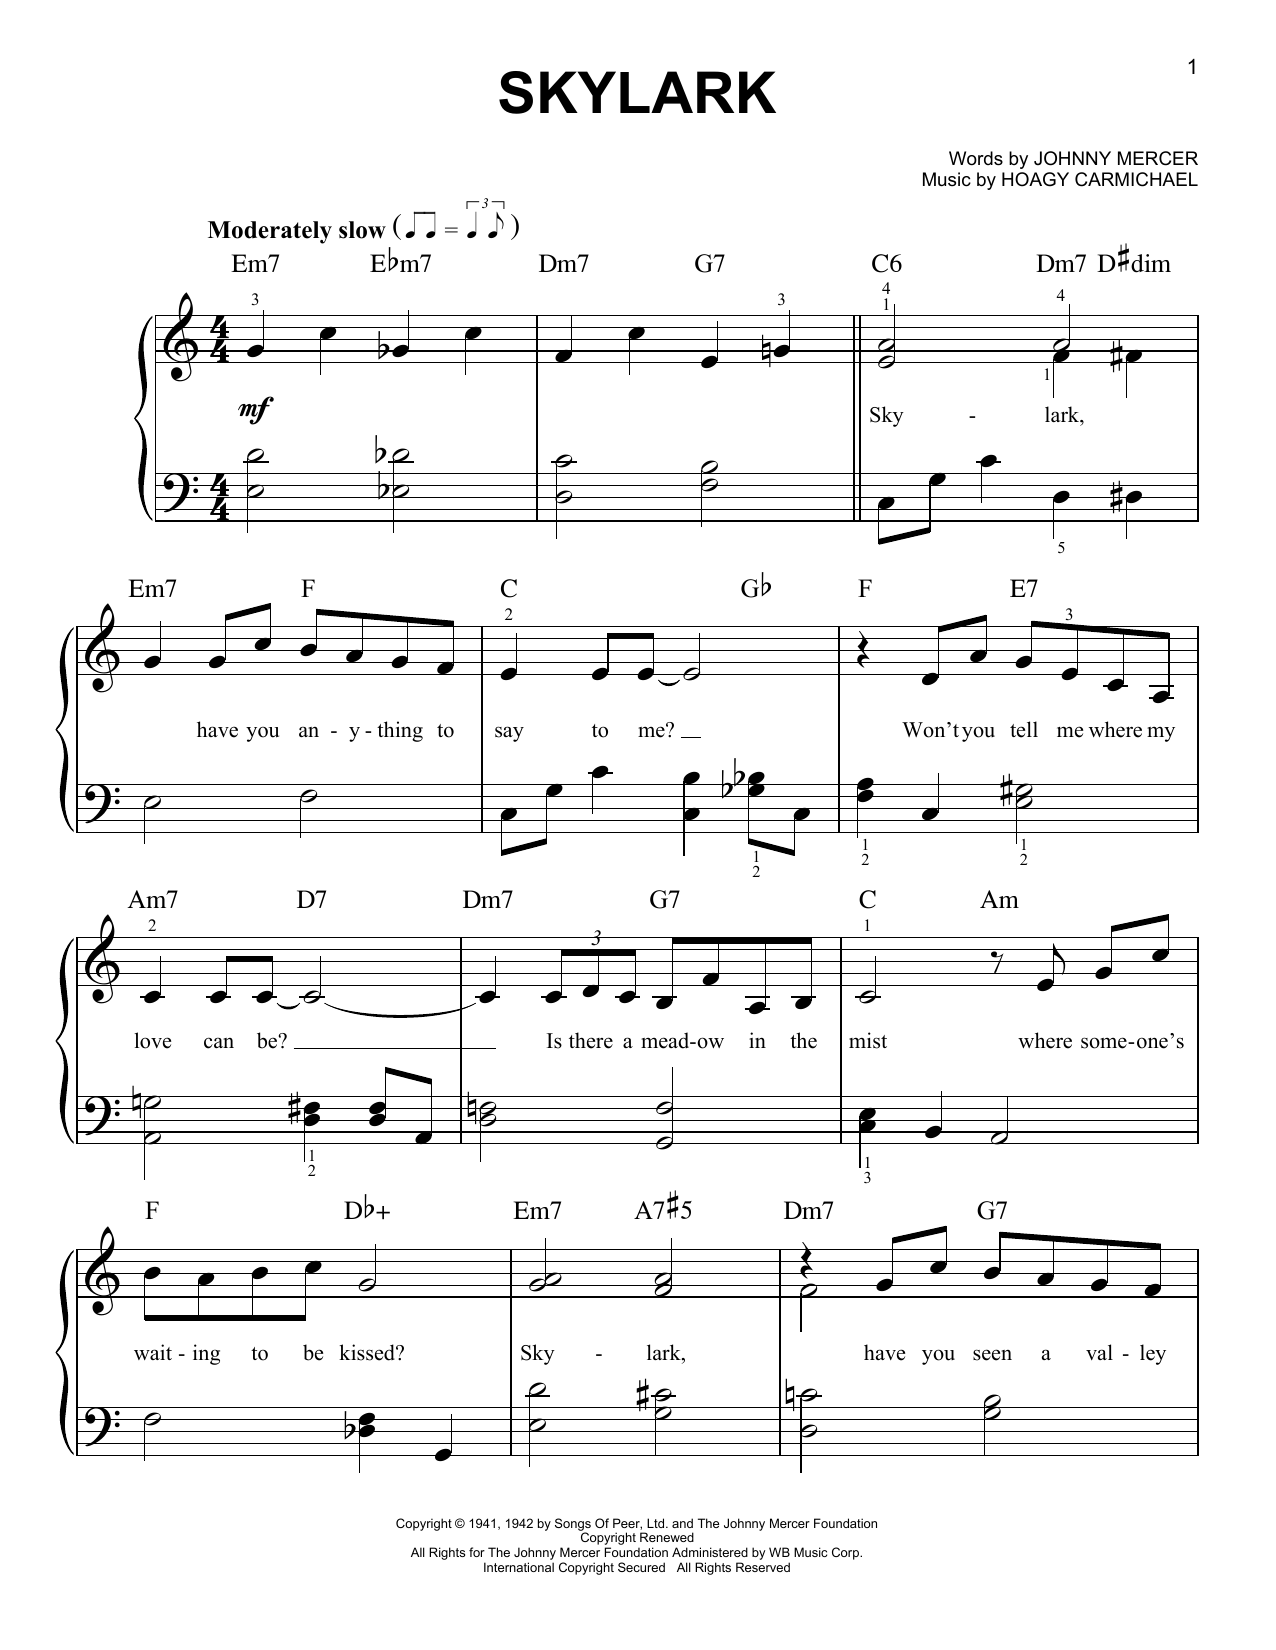 Hoagy Carmichael Skylark Sheet Music Notes & Chords for Super Easy Piano - Download or Print PDF